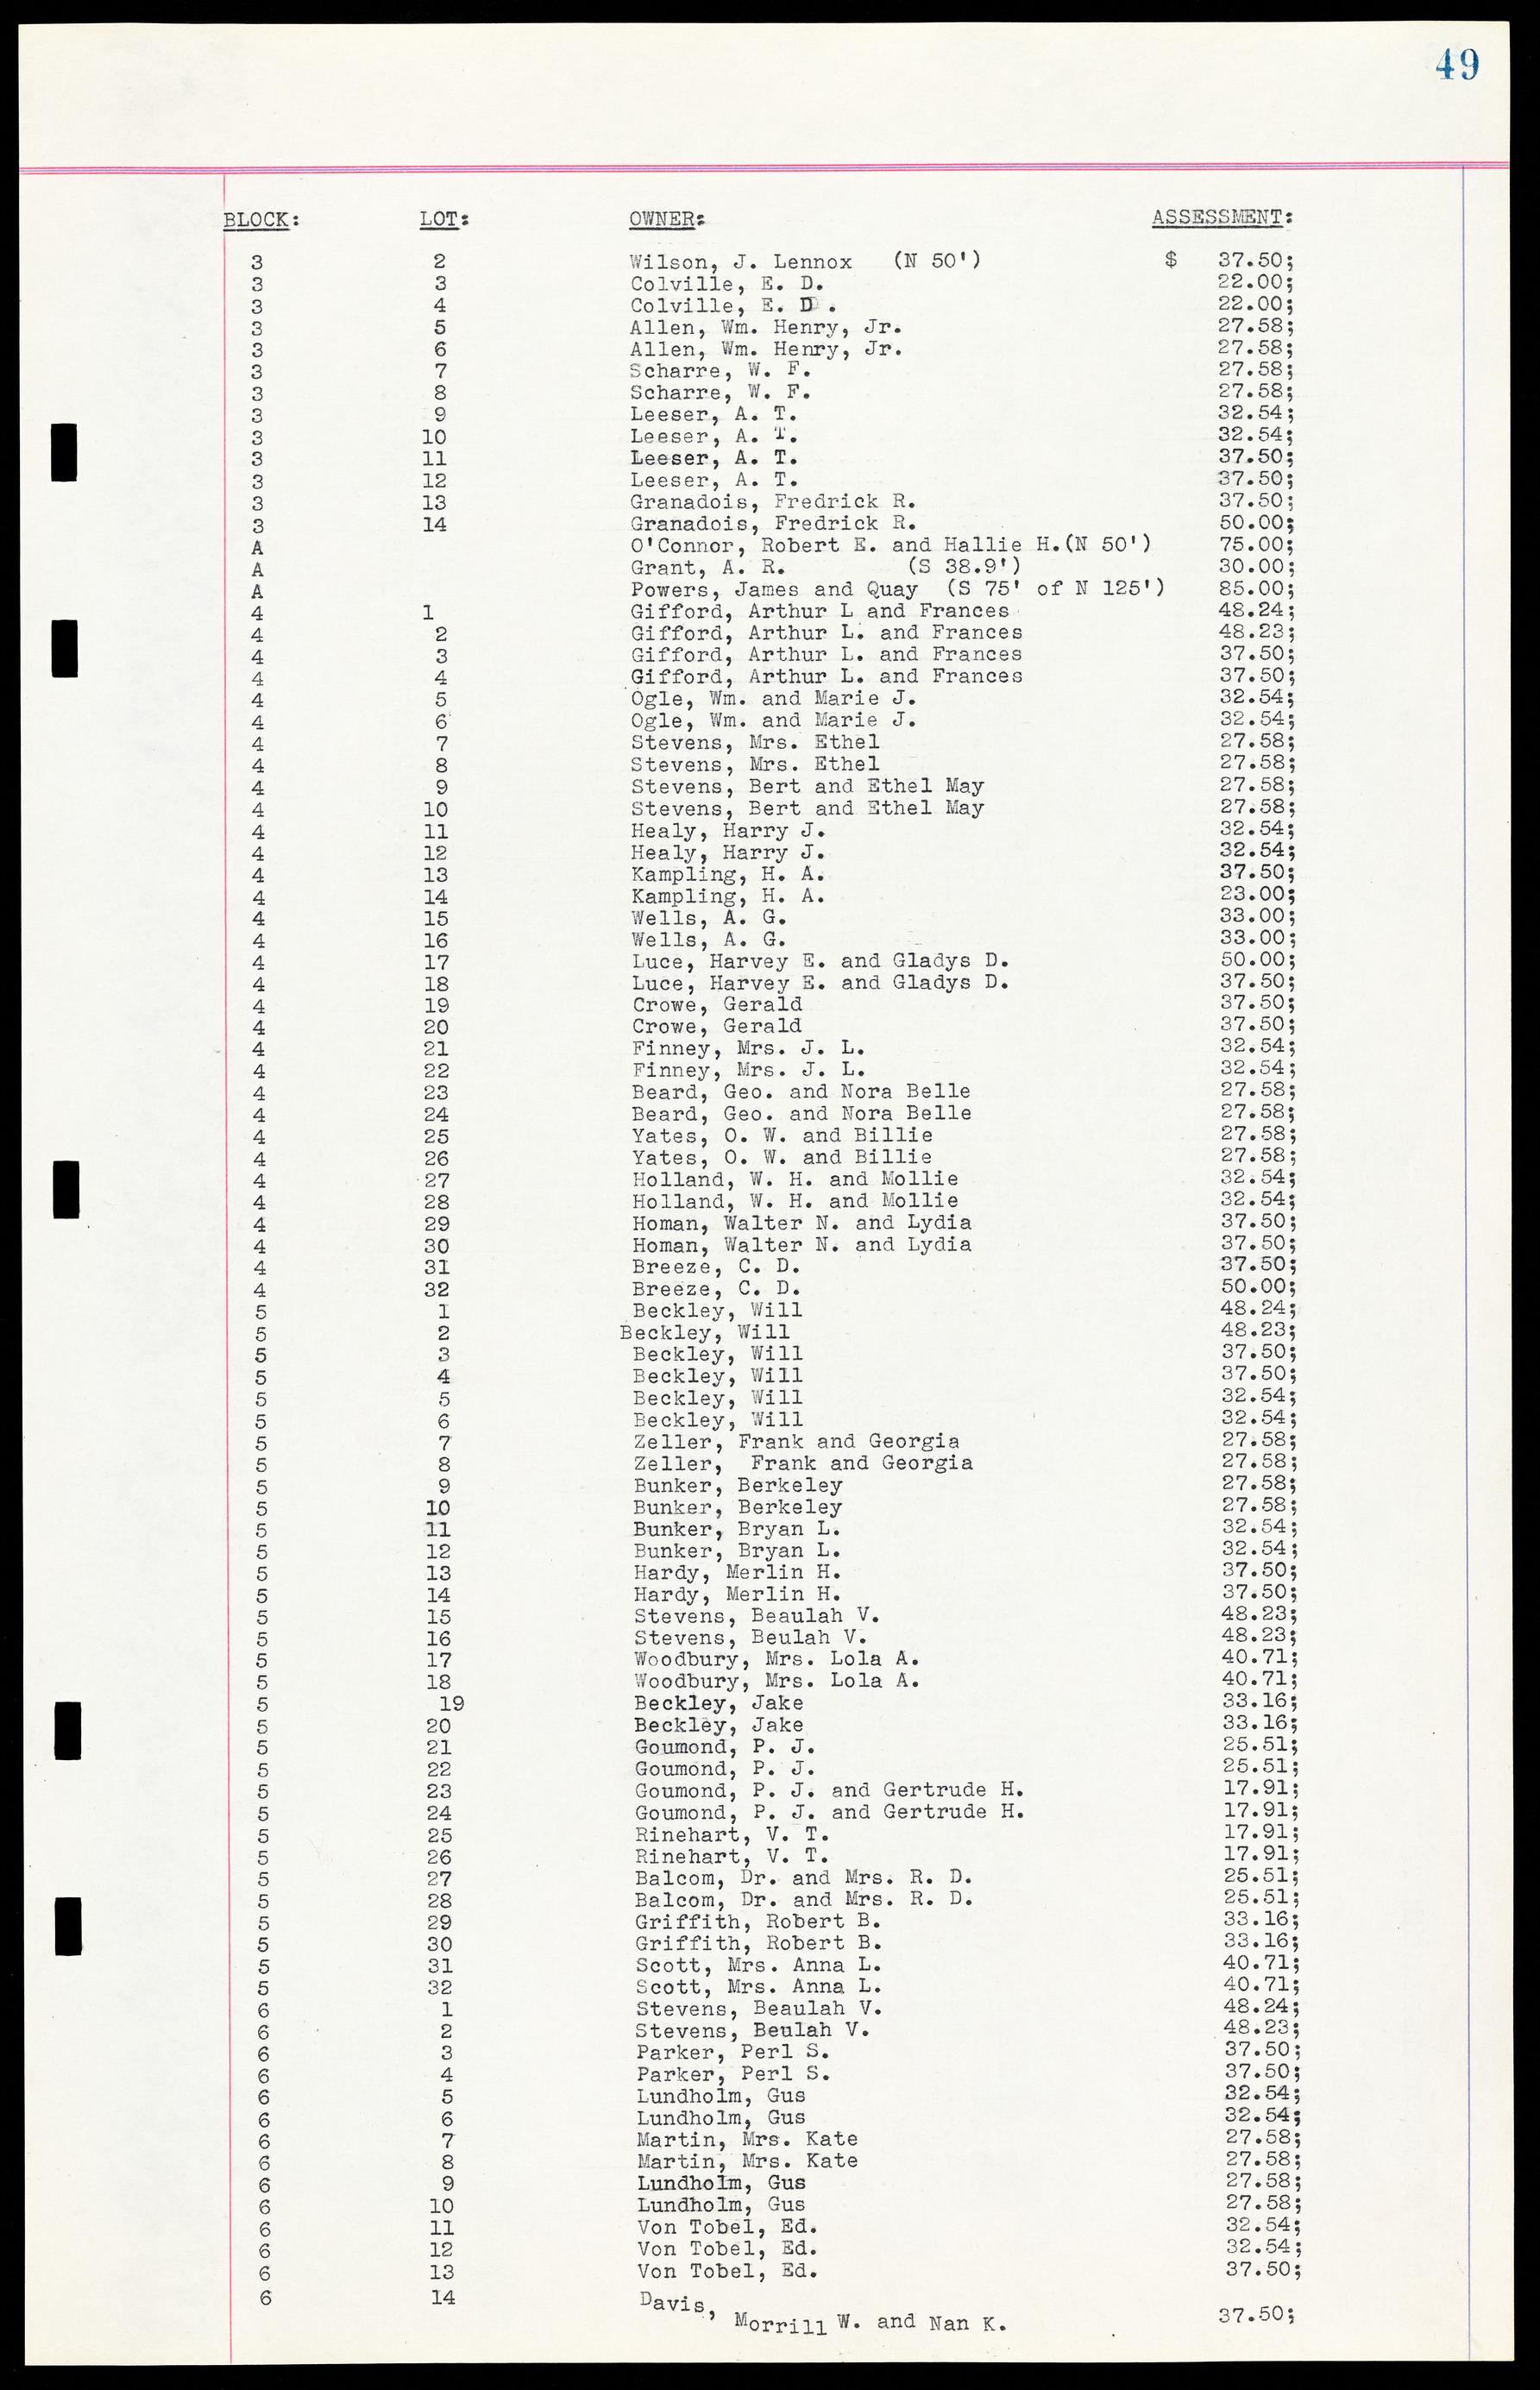 Las Vegas City Ordinances, March 31, 1933 to October 25, 1950, lvc000014-67